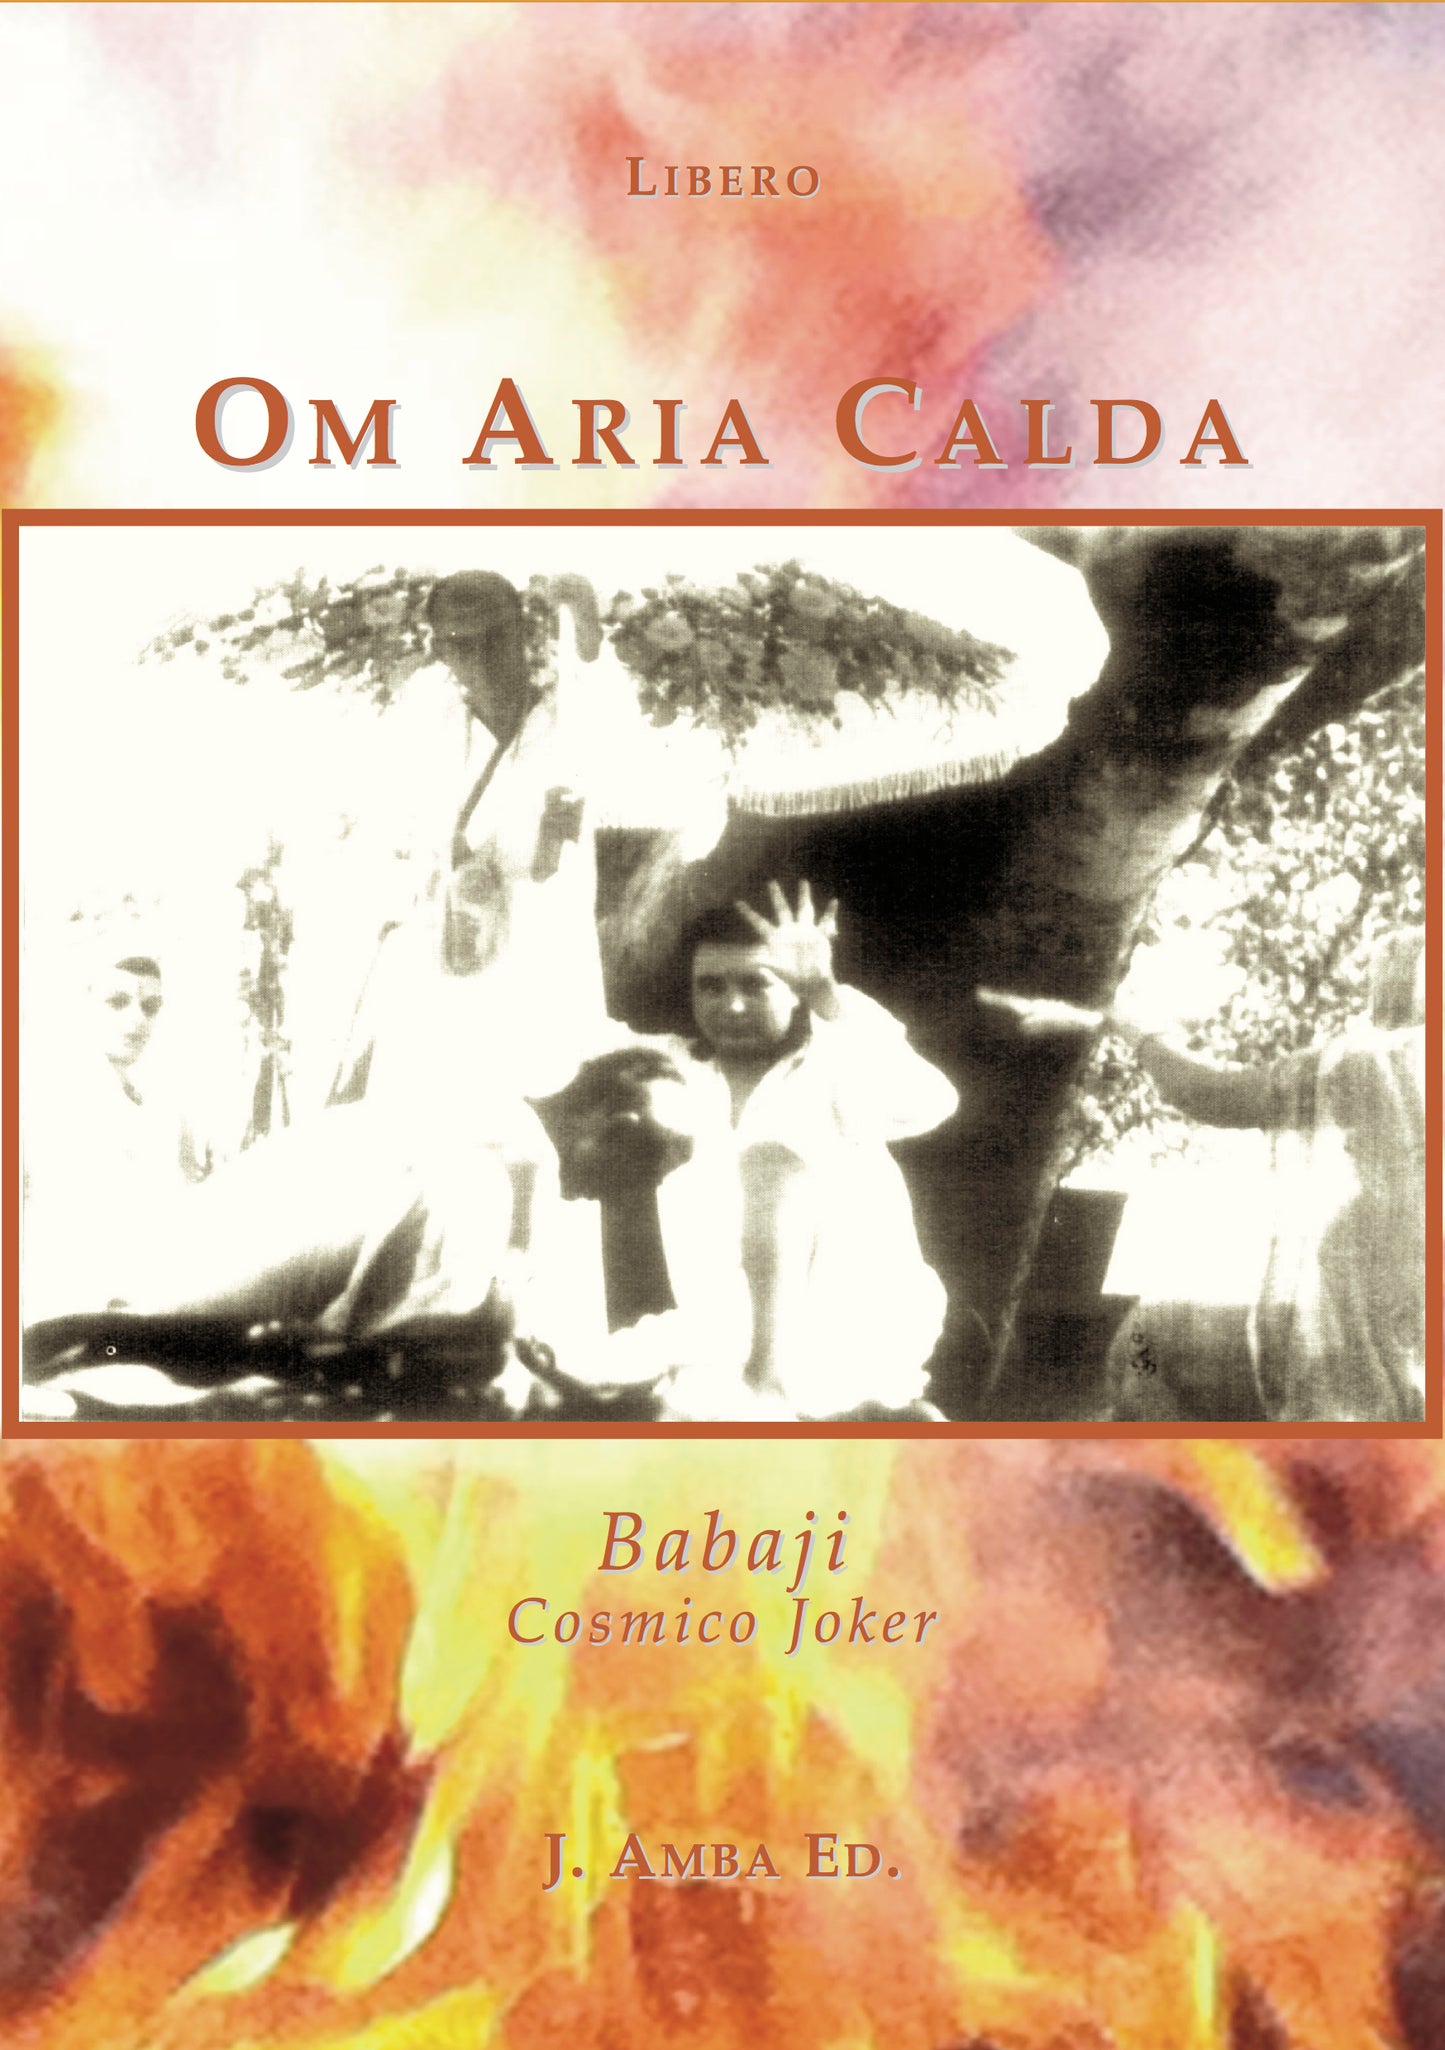 Om Aria Calda, Babaji Cosmico Joker - Hindu Sanatan Dharma Spirituality Funny Travel Experience Book about Hairakhan Babaji by Giuseppe Libero Mangieri